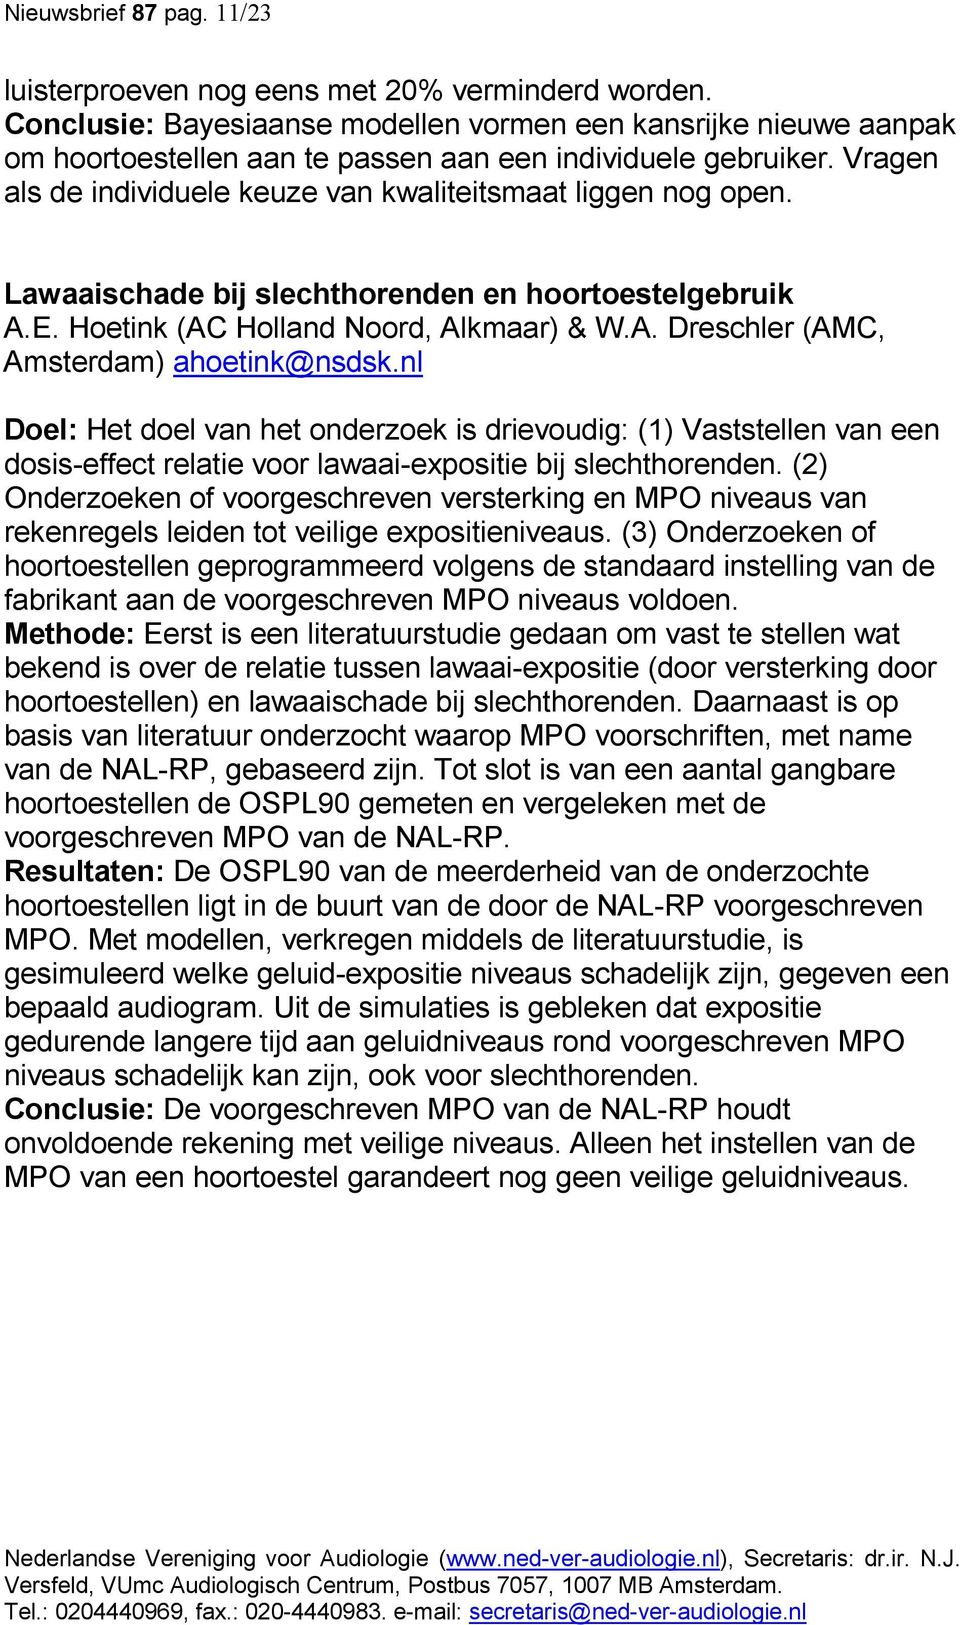 Lawaaischade bij slechthorenden en hoortoestelgebruik A.E. Hoetink (AC Holland Noord, Alkmaar) & W.A. Dreschler (AMC, Amsterdam) ahoetink@nsdsk.